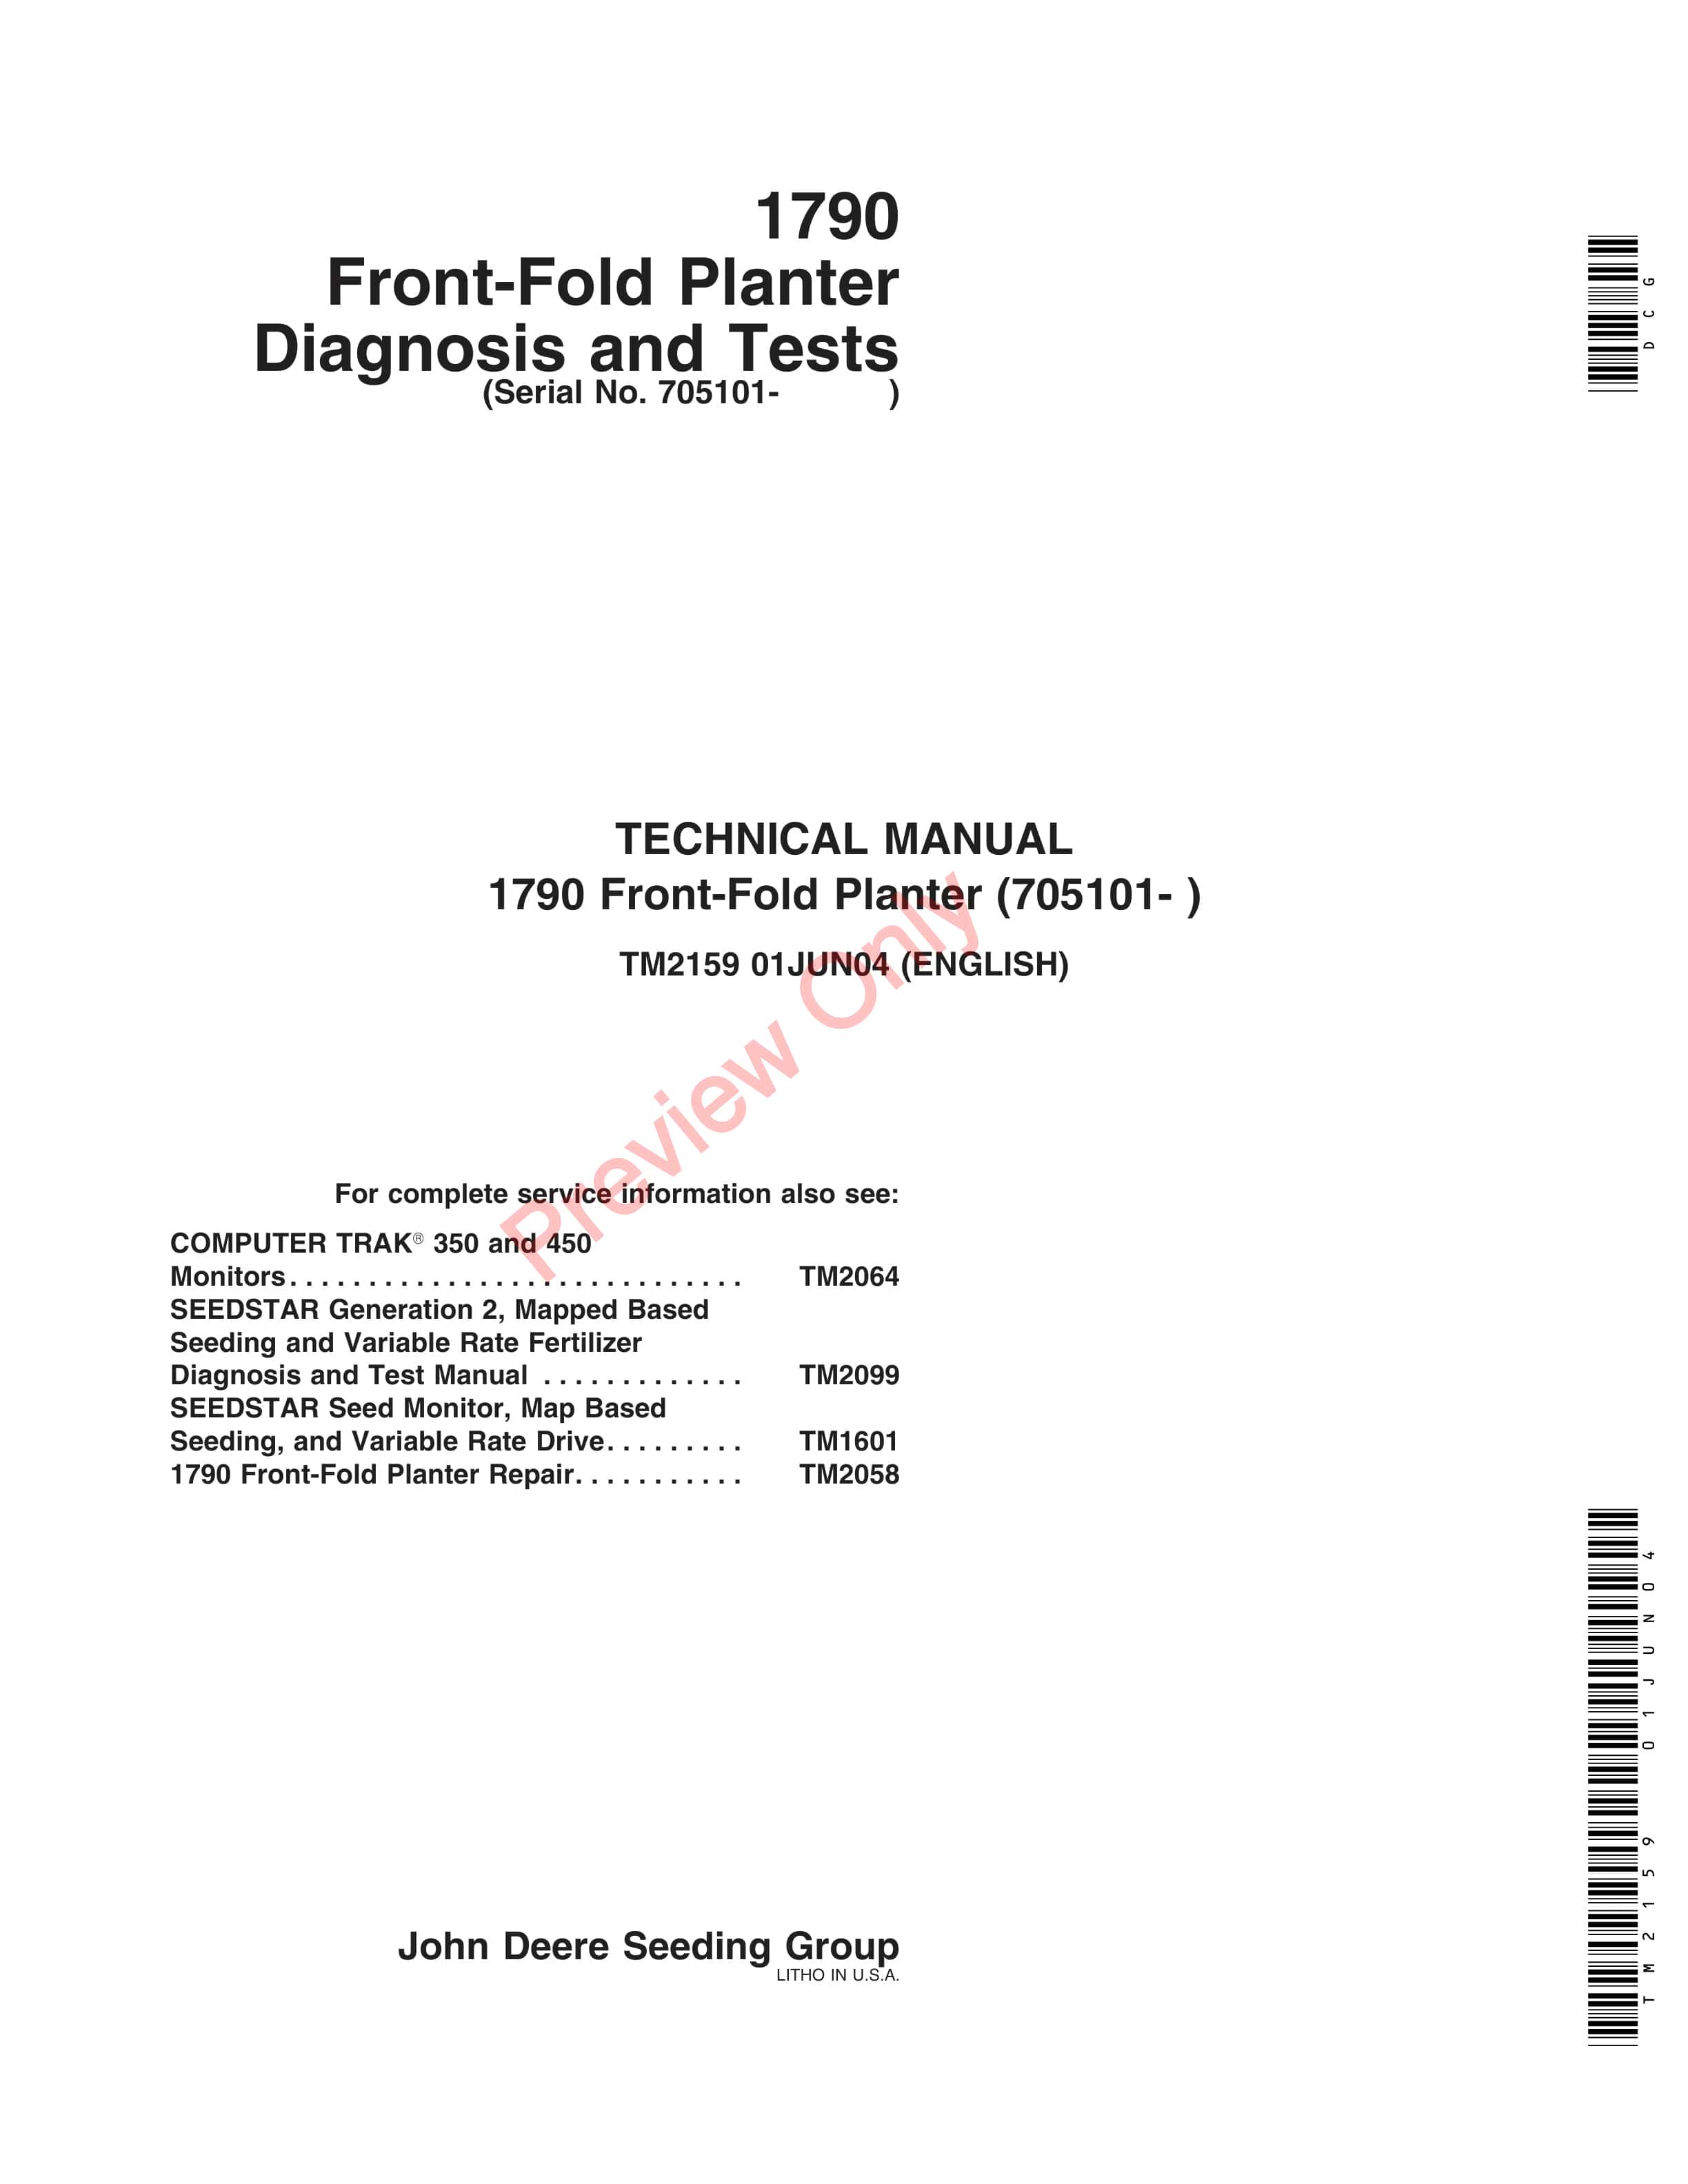 John Deere 1790 Front Fold Planter Technical Manual TM2159 01JUN04 1